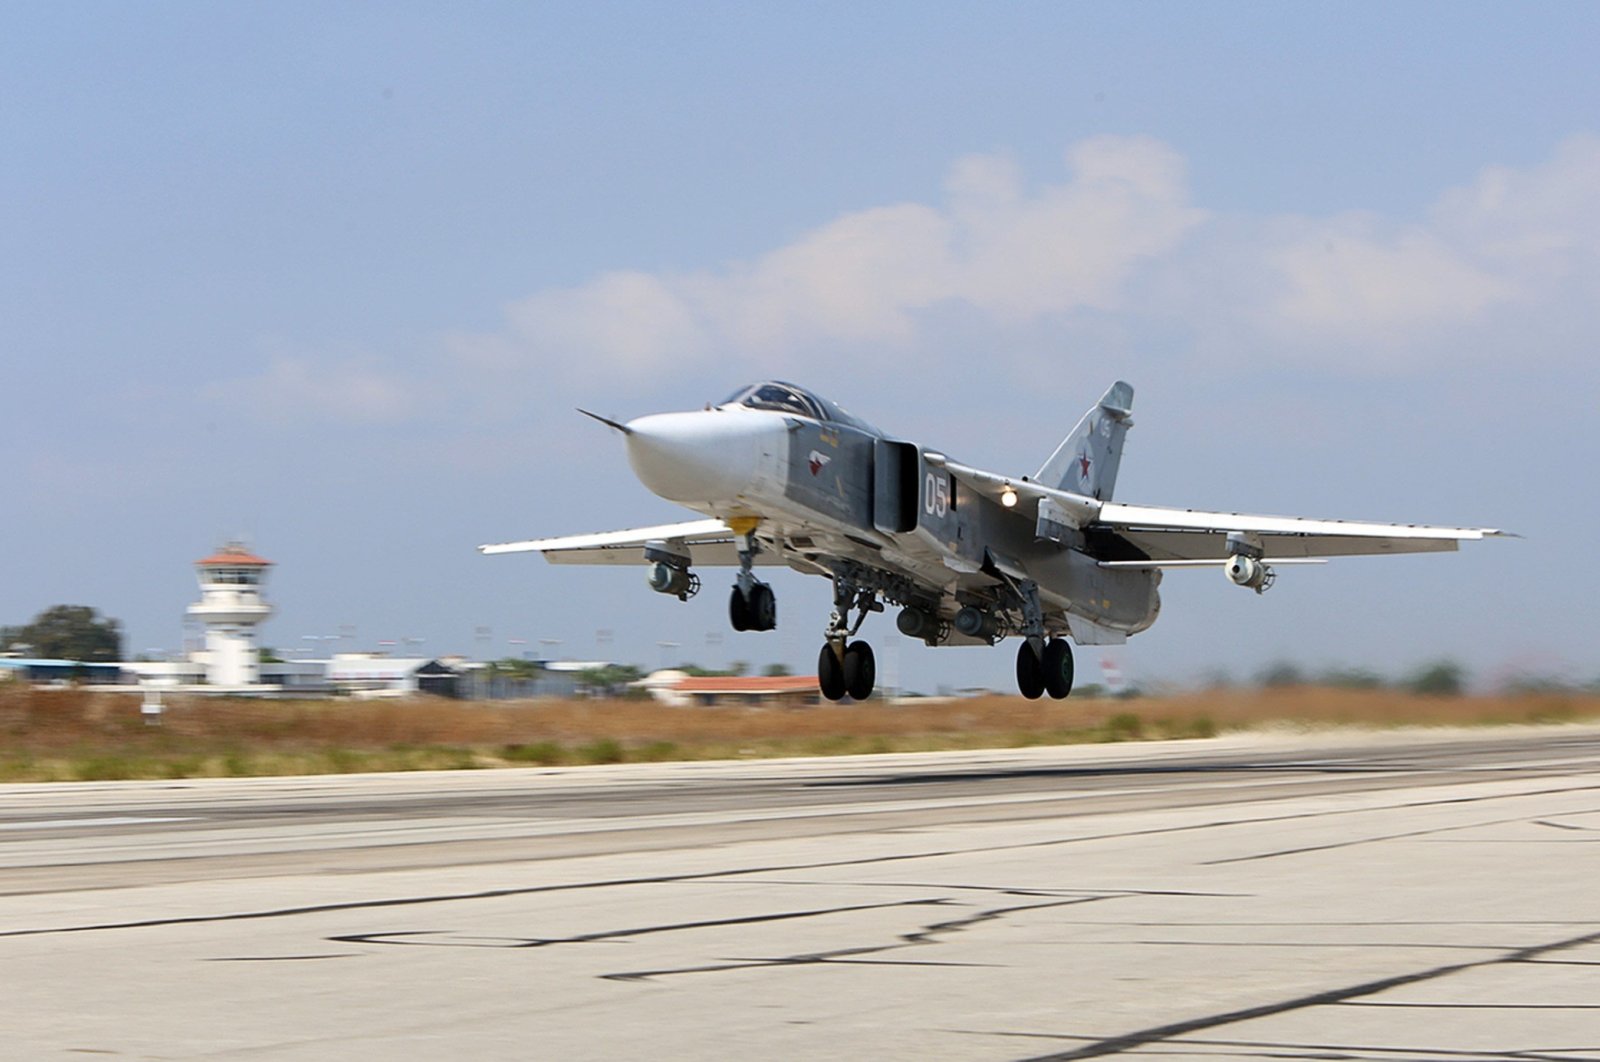 A Sukhoi Su-24 fighter jet lands at the Hmeimim air base near Latakia, Syria, Nov. 7, 2015. (Reuters Photo)